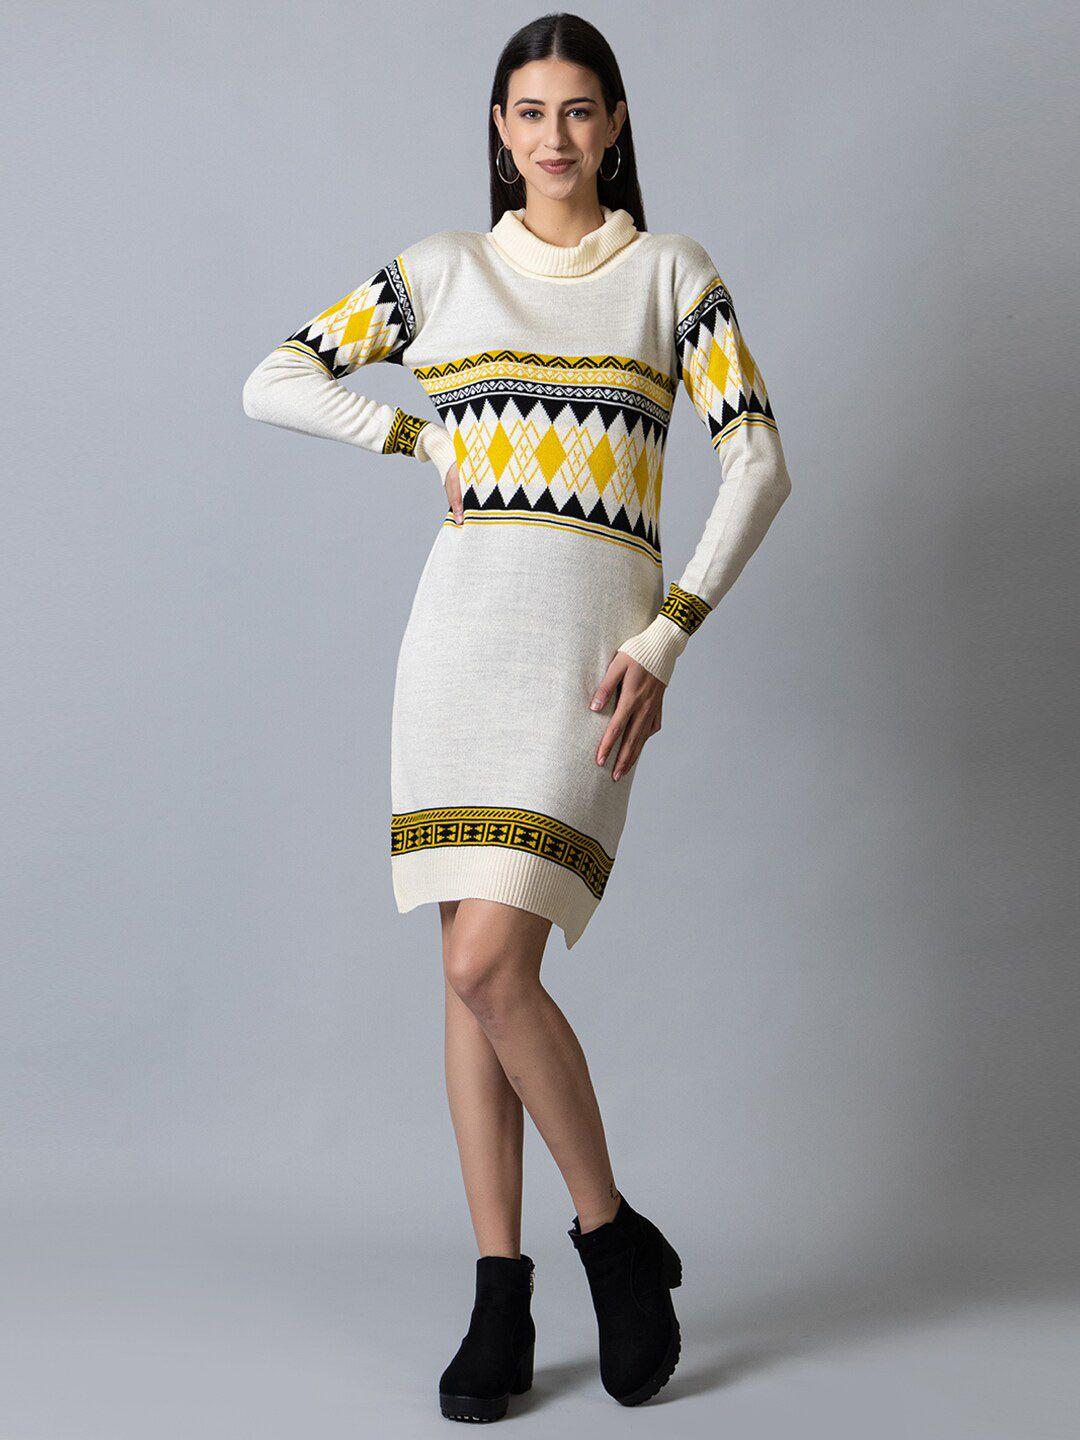 club york jacquard printed acrylic jumper dress